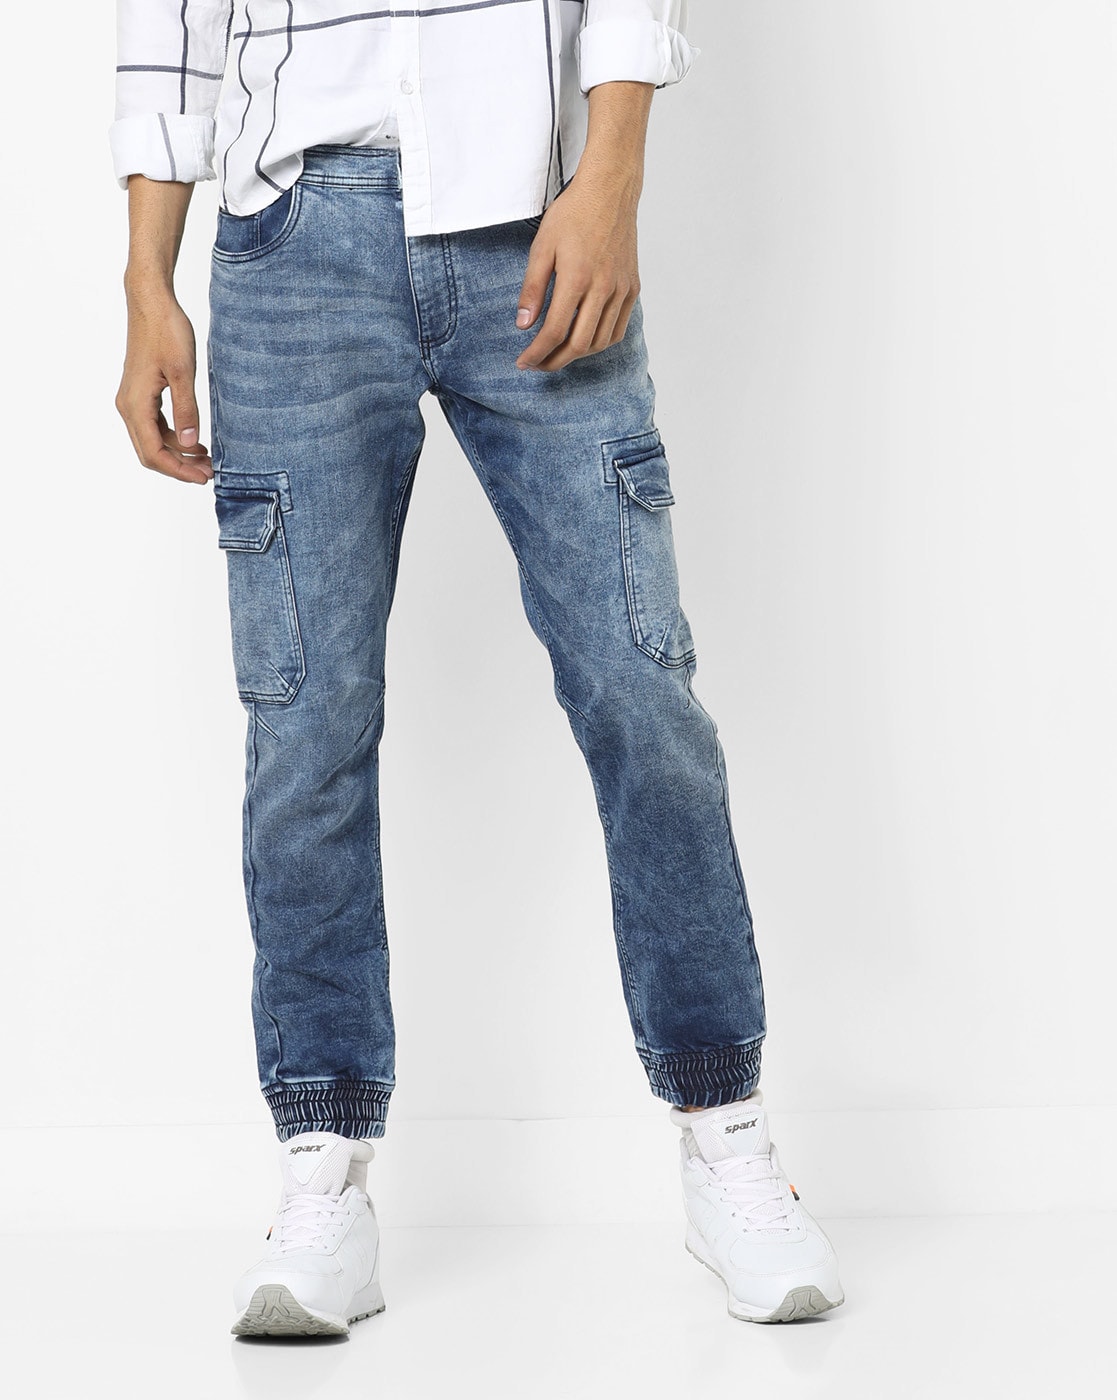 wrangler men's regular fit jean with comfort flex waistband